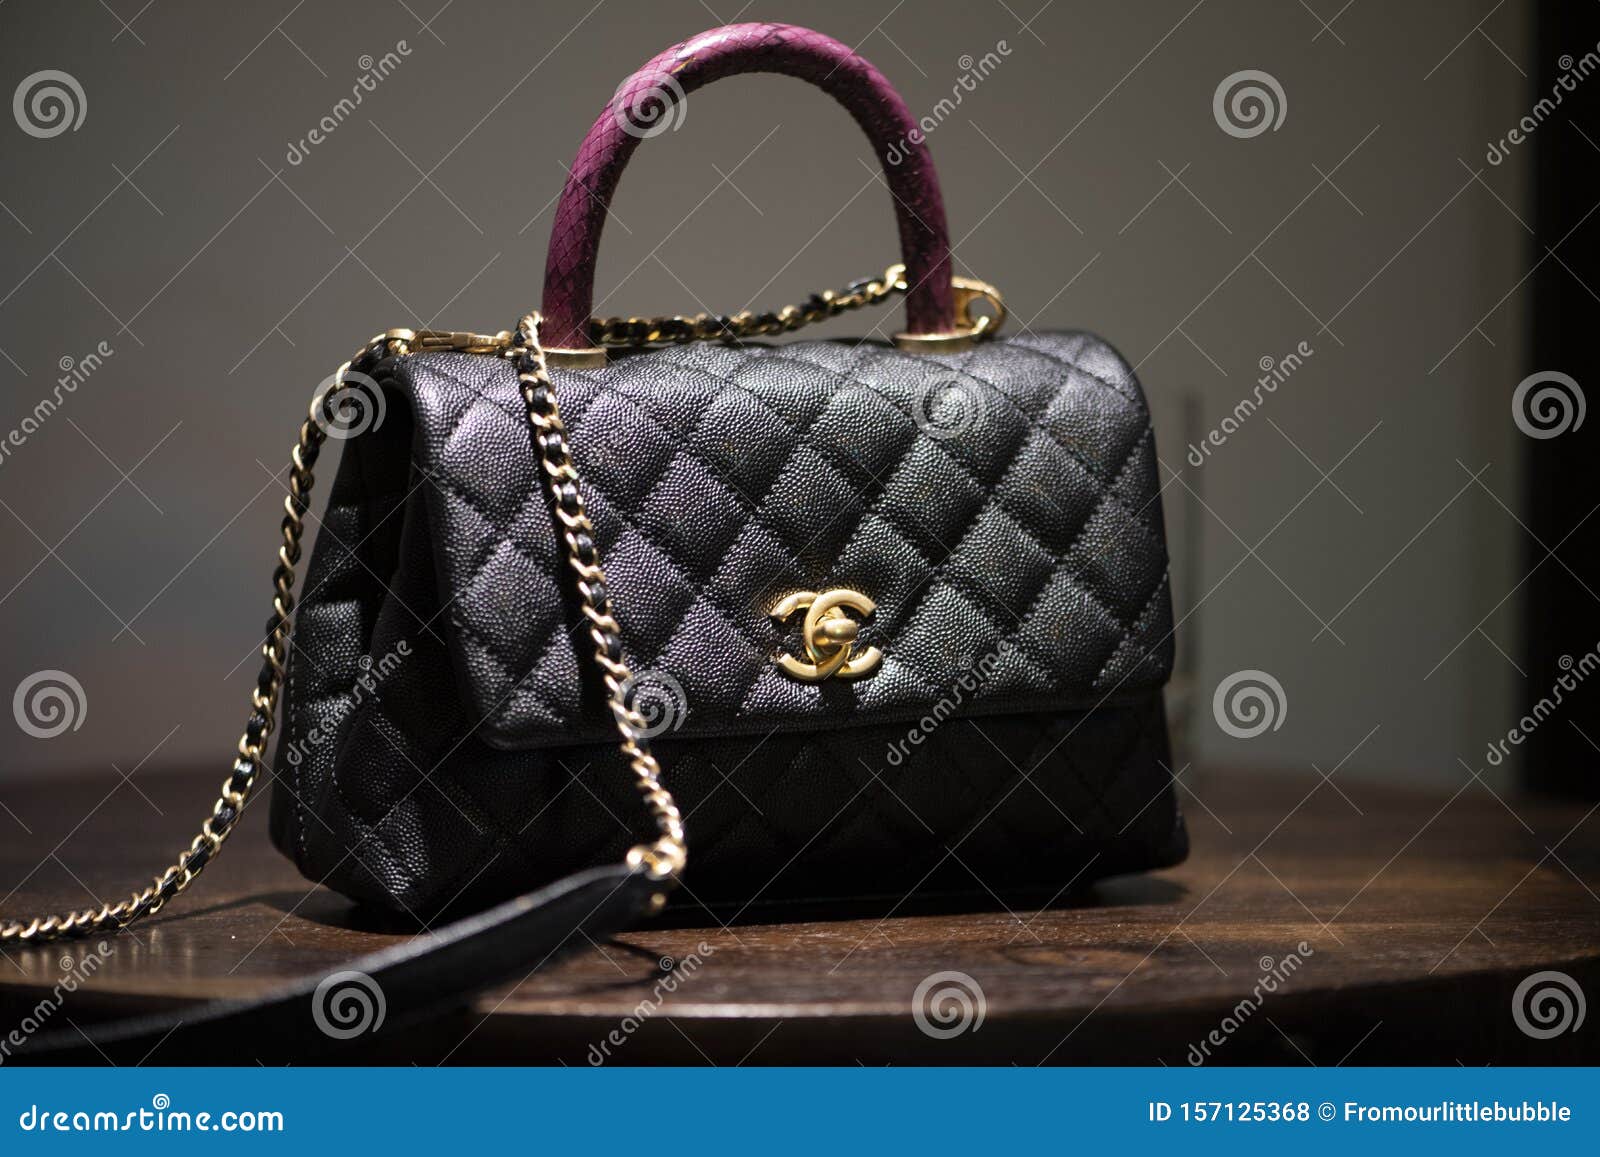 Chanel Handbag: Over 25 Royalty-Free Licensable Stock Vectors & Vector Art